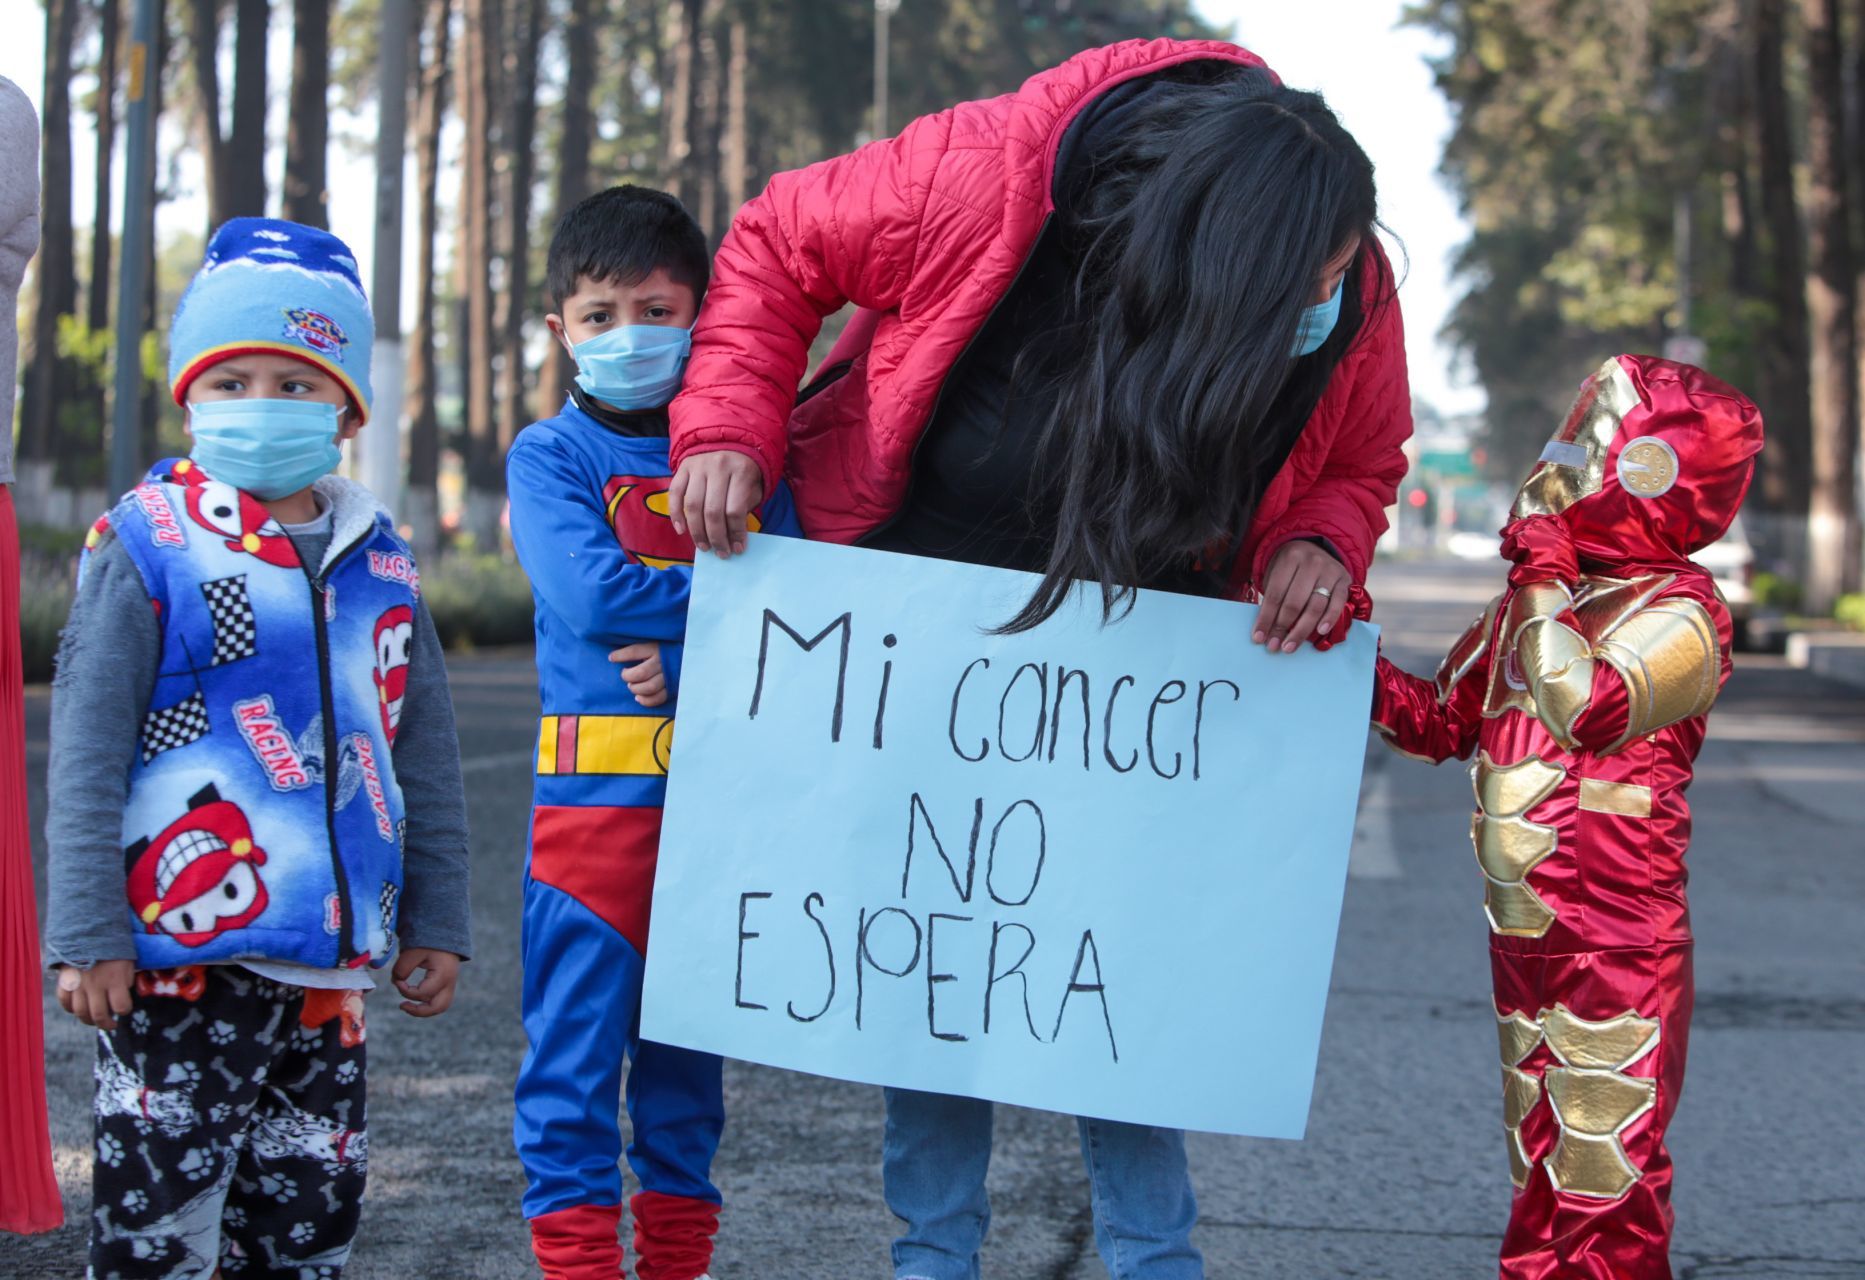 cáncer infantil, medicamentos, figuras influyentes, México, 2020